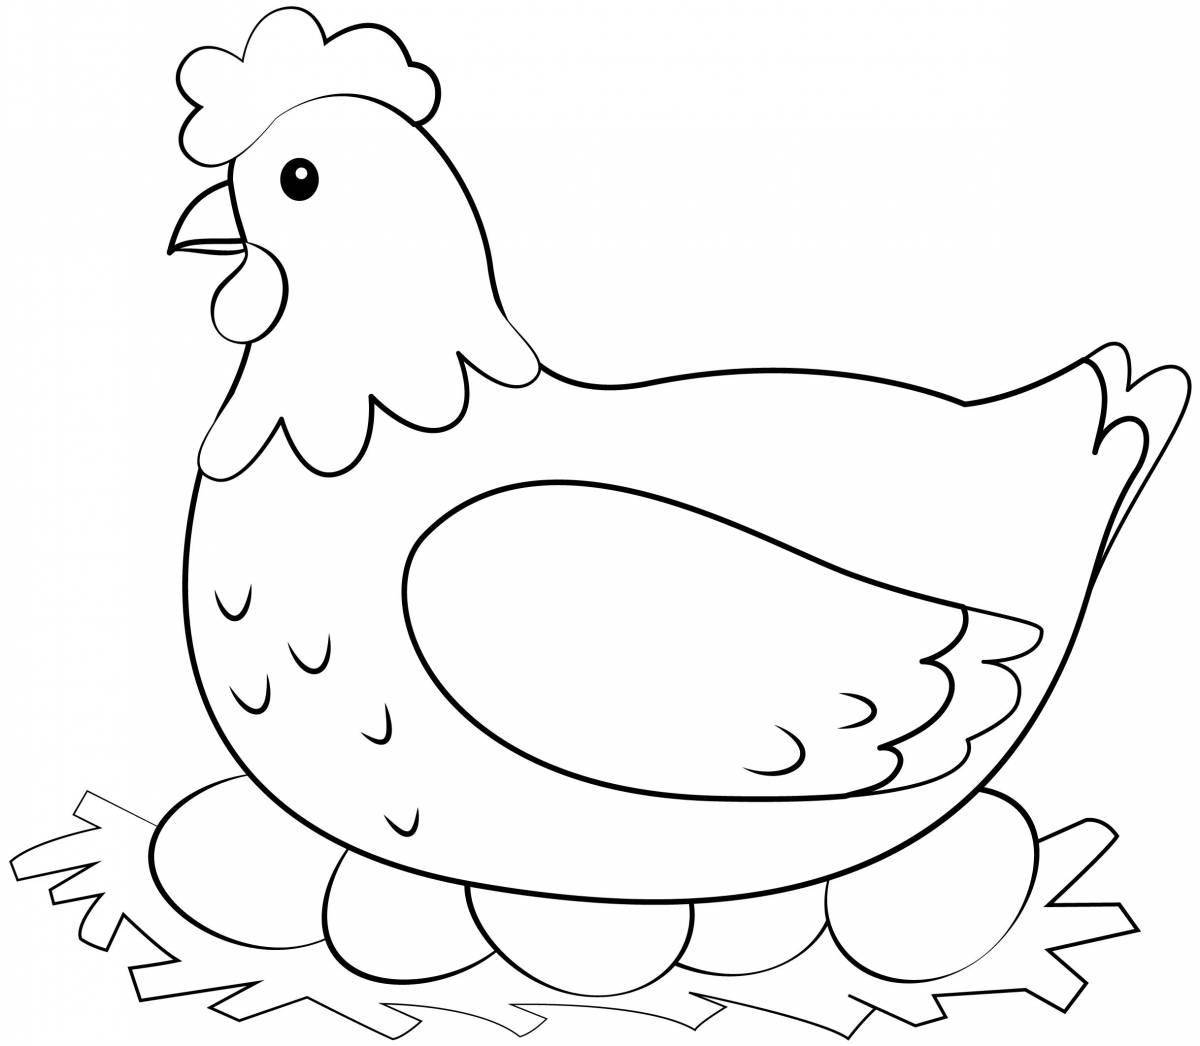 Креативная раскраска цыпленка для детей